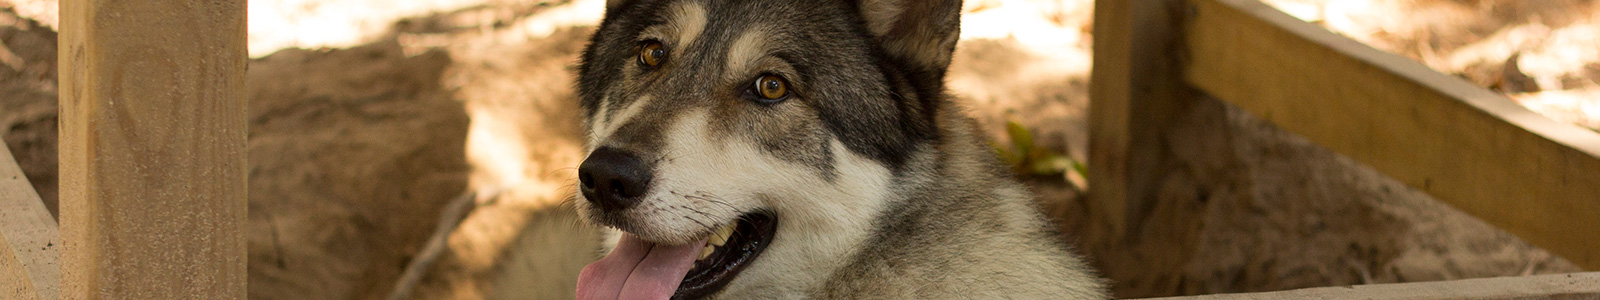 Texas Wolfdog Project Adoptable - Shiloh Header Image